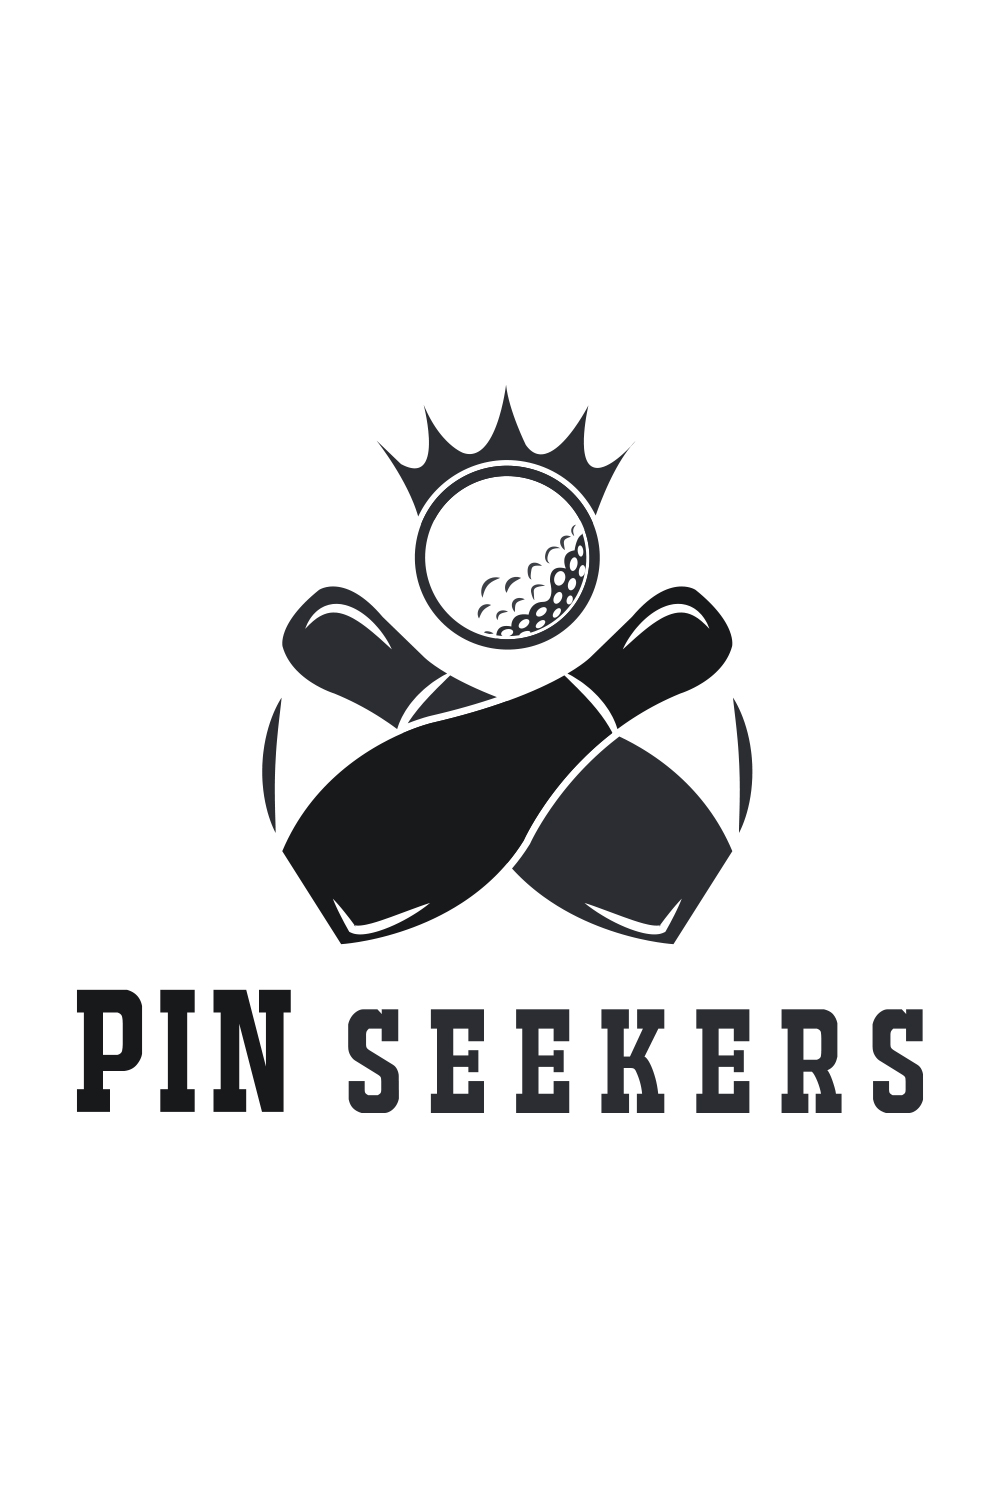 Bowling logo design ( Sports ) pinterest preview image.